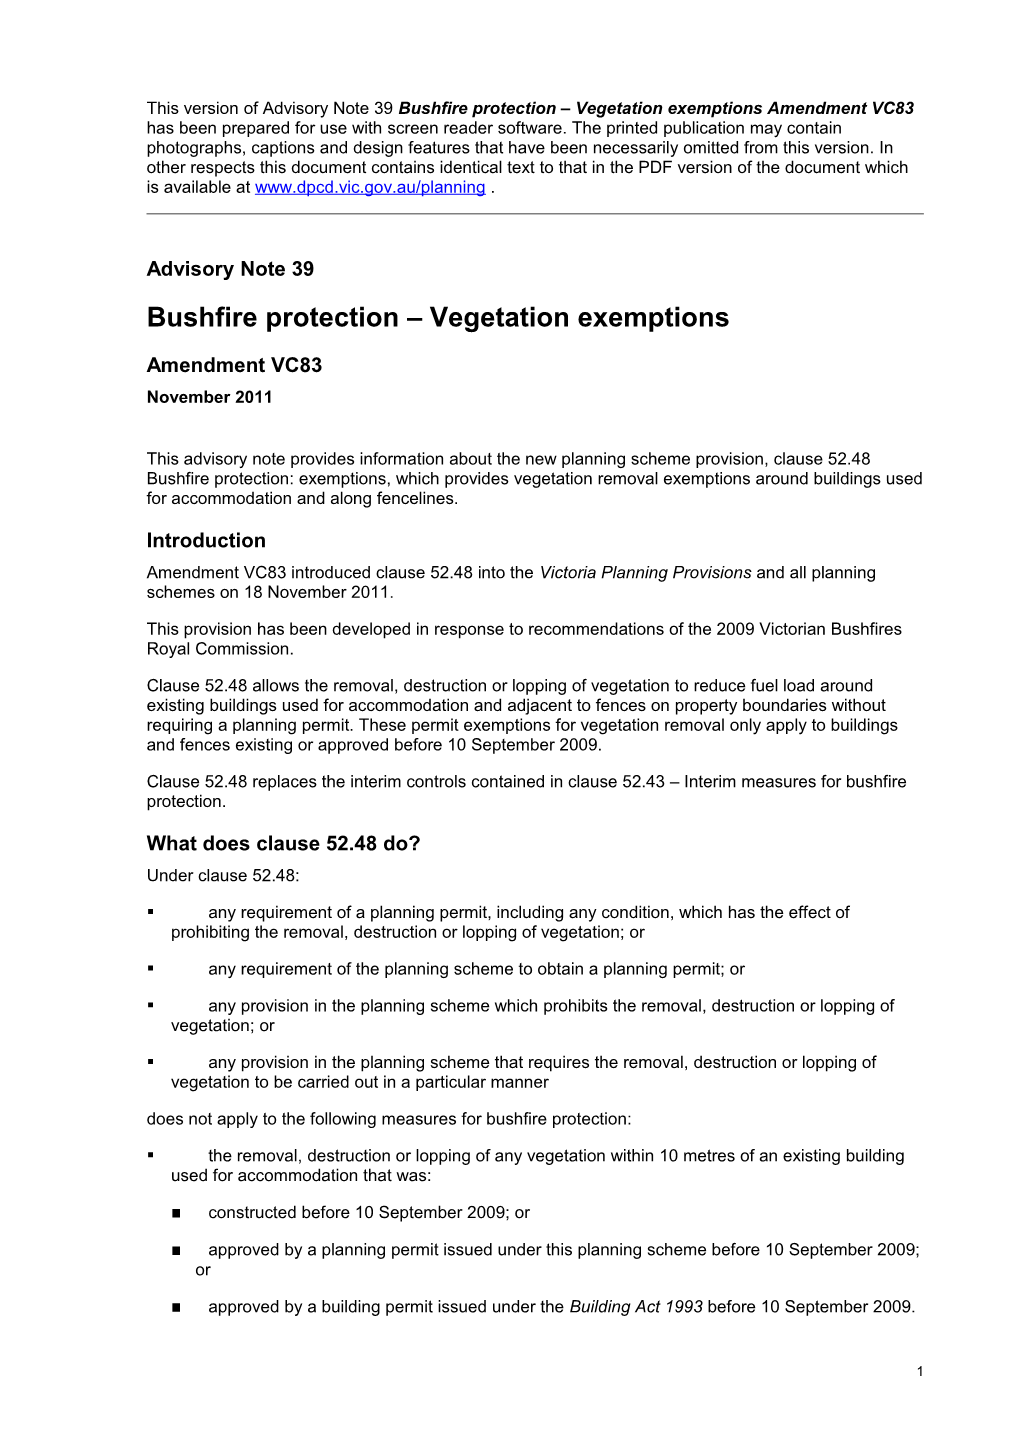 Advisory Note 39 Bushfire Protection Vegetation Exemptions Amendment VC83